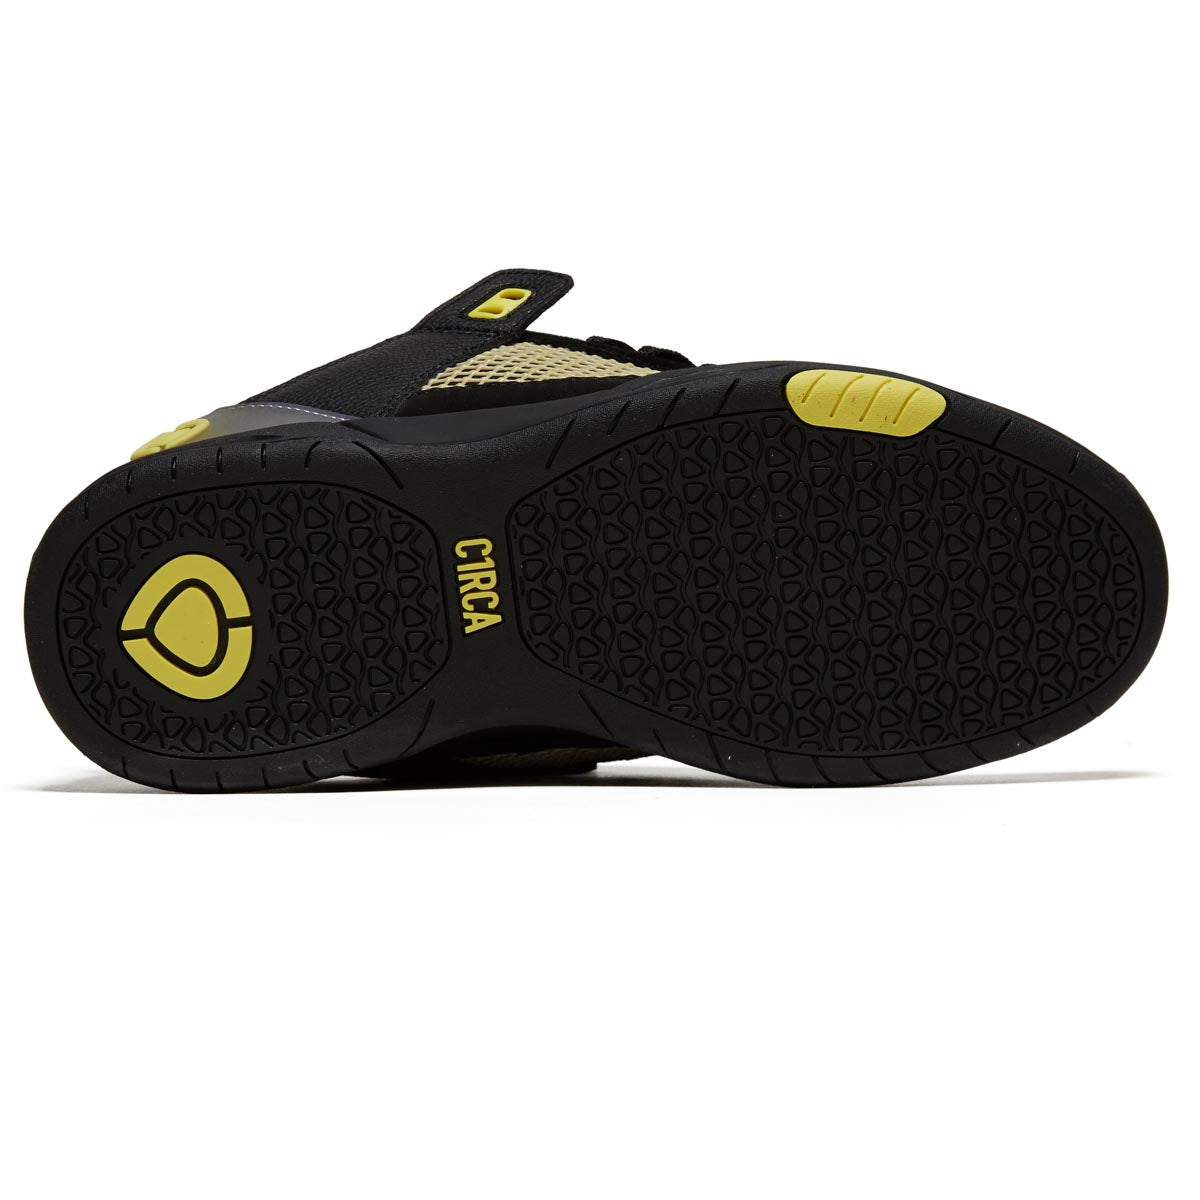 C1rca Tave TT Shoes - Black/Yellow image 4